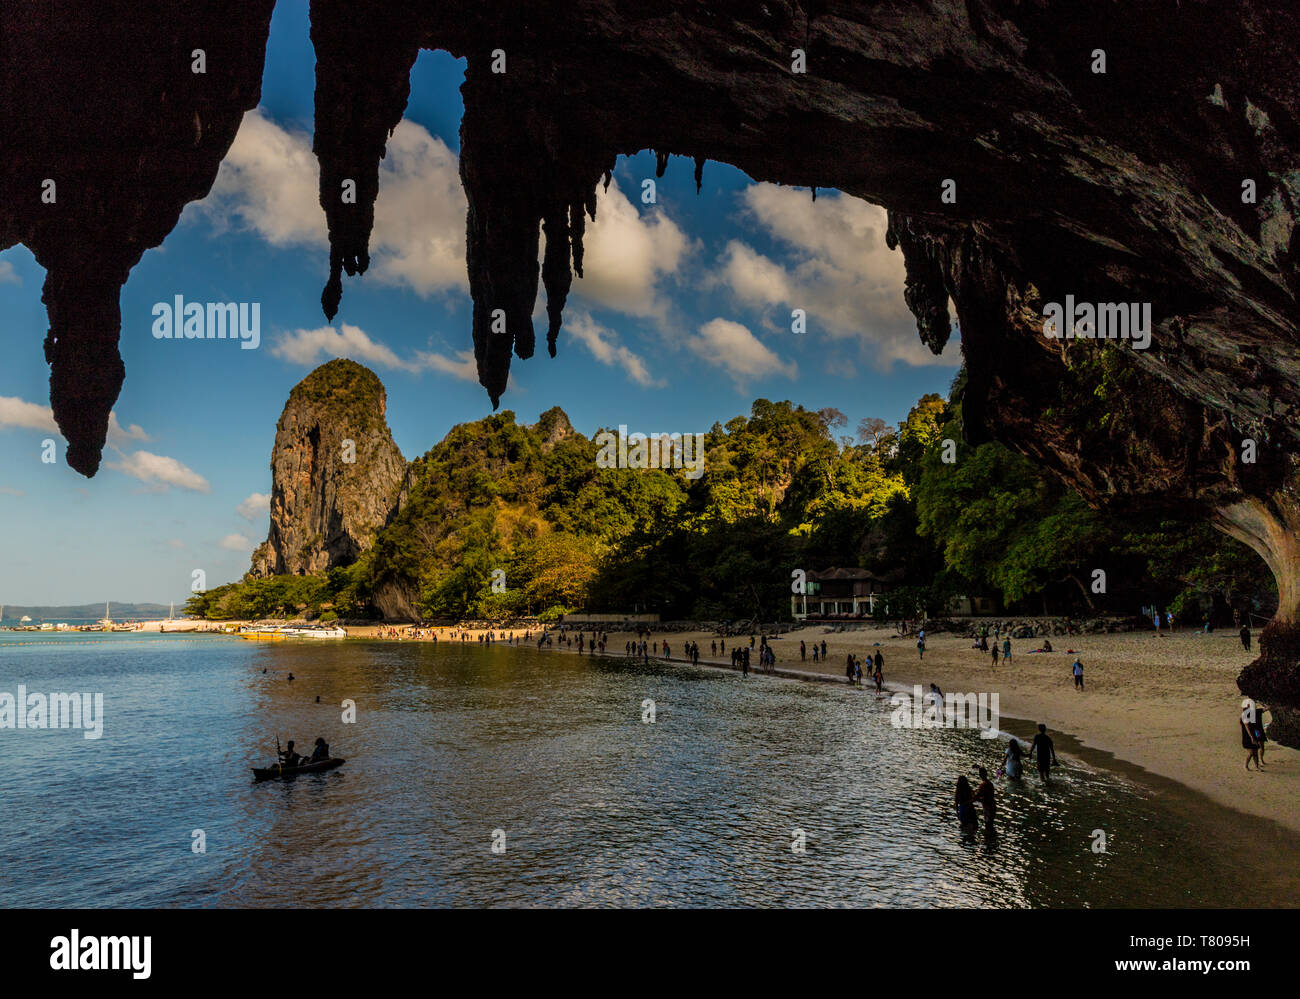 Phra Nang beach and karst landscapes in Railay, Ao Nang, Krabi Province, Thailand, Southeast Asia, Asia Stock Photo